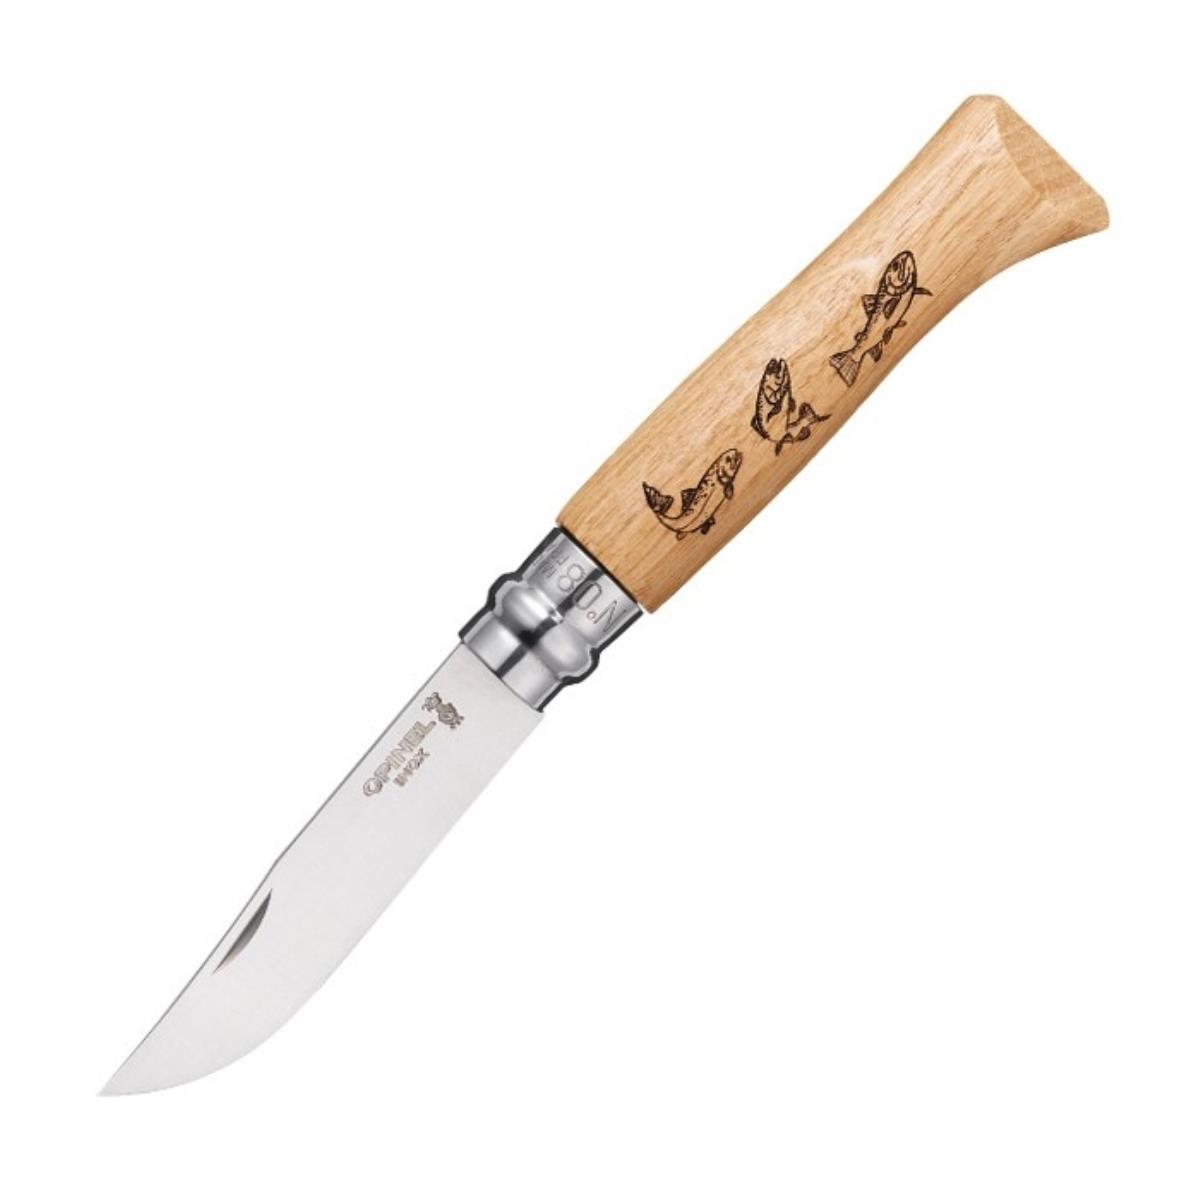 Нож №8 VRI Animalia Trout (форель), рукоять дуб, длина клинка 8.5 OPINEL нож бабочка мастер к лезвие 7 см рукоять с волнами под углом 9 см